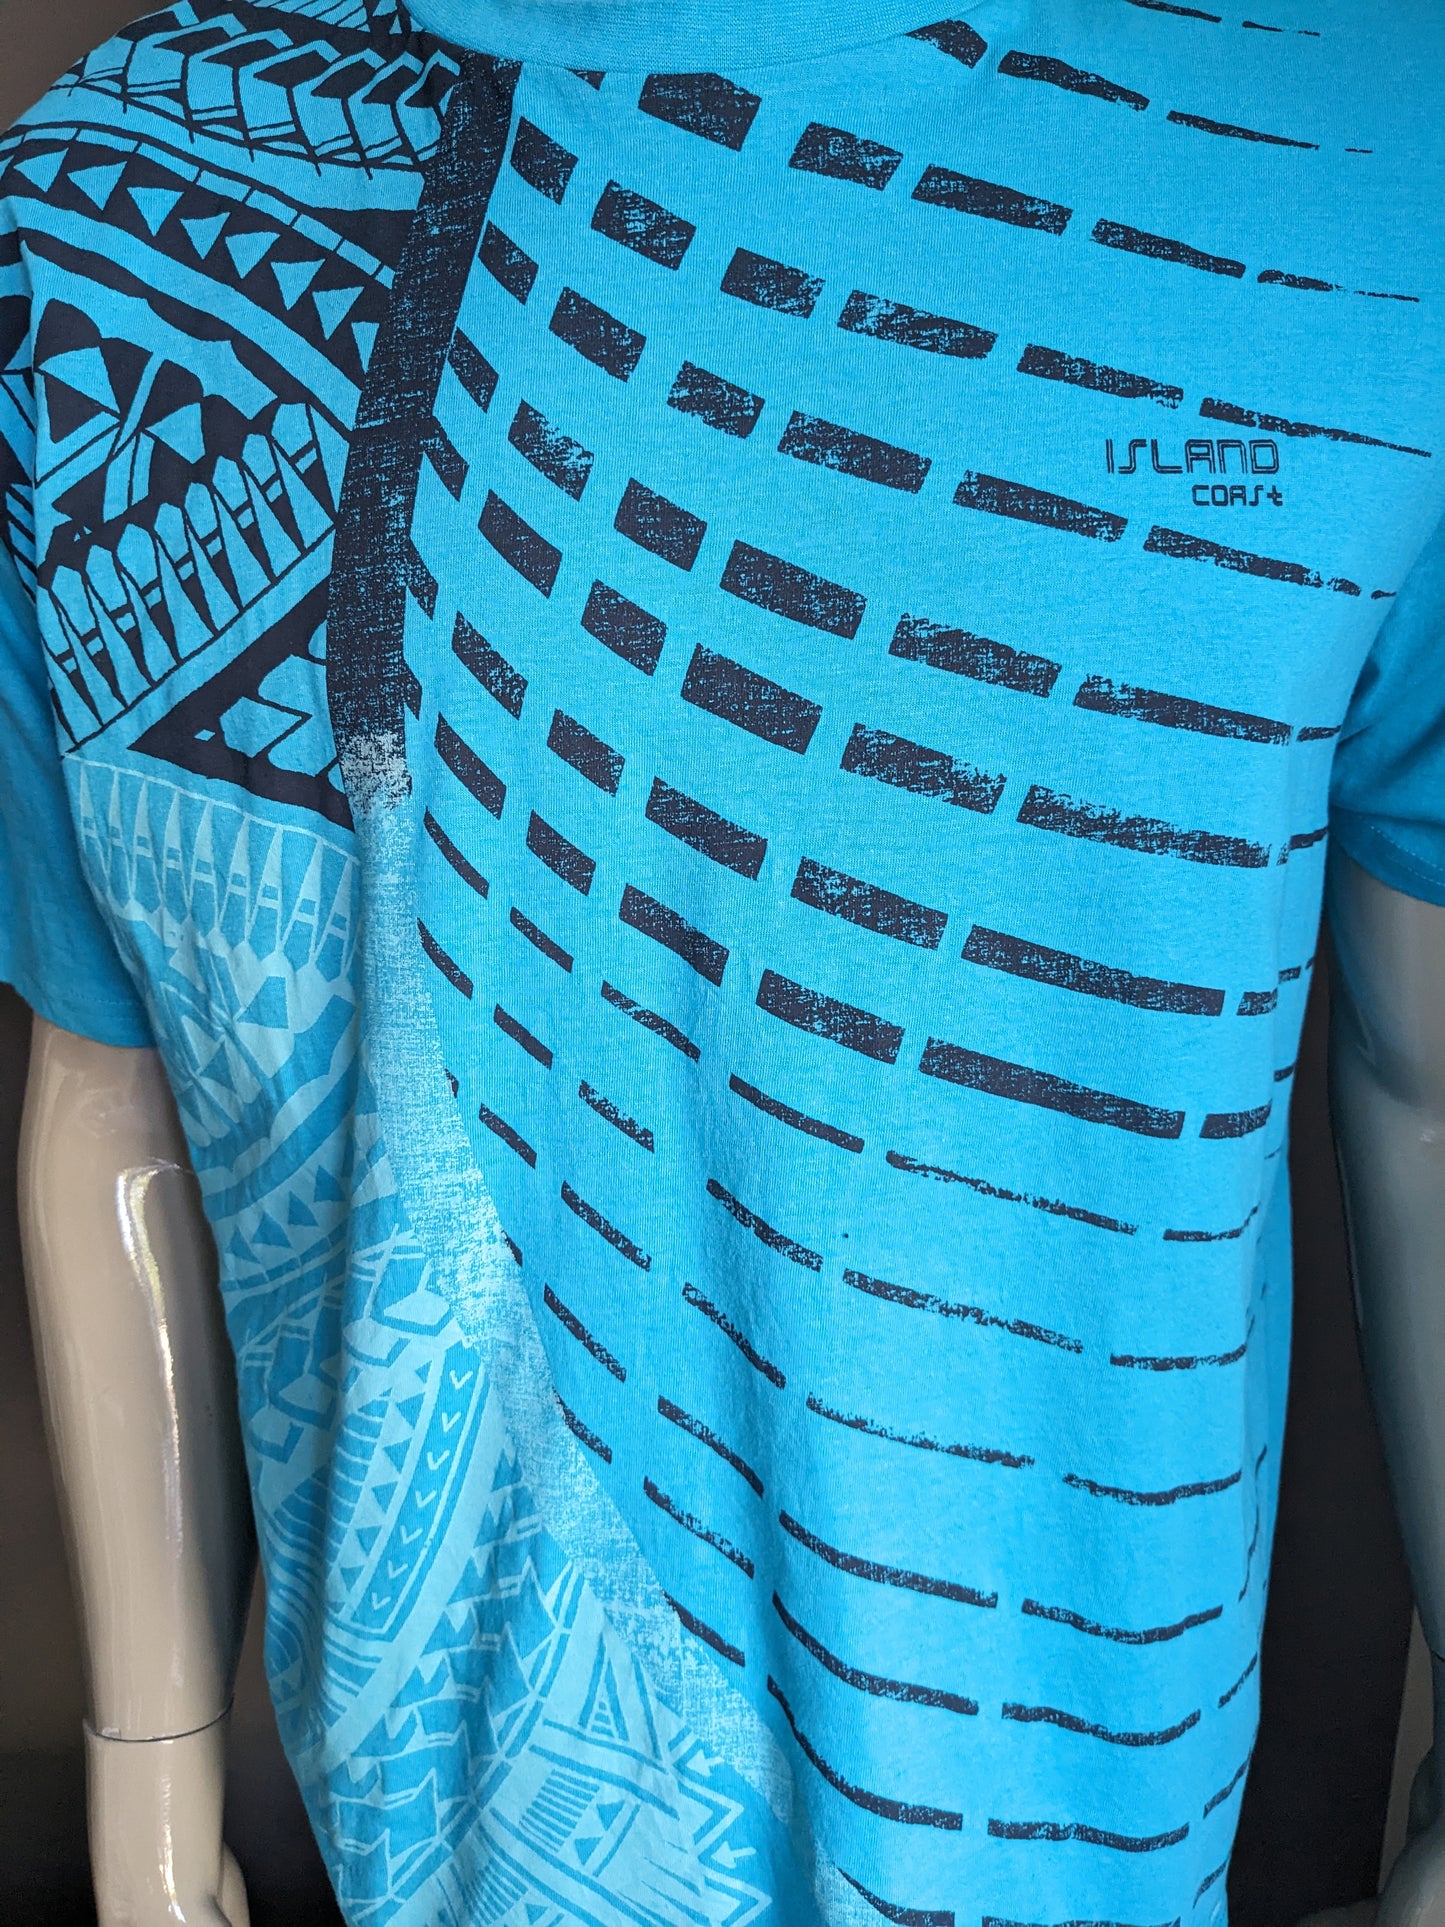 Atlas for men shirt. Blue with print. Size 3XL / XXXL.